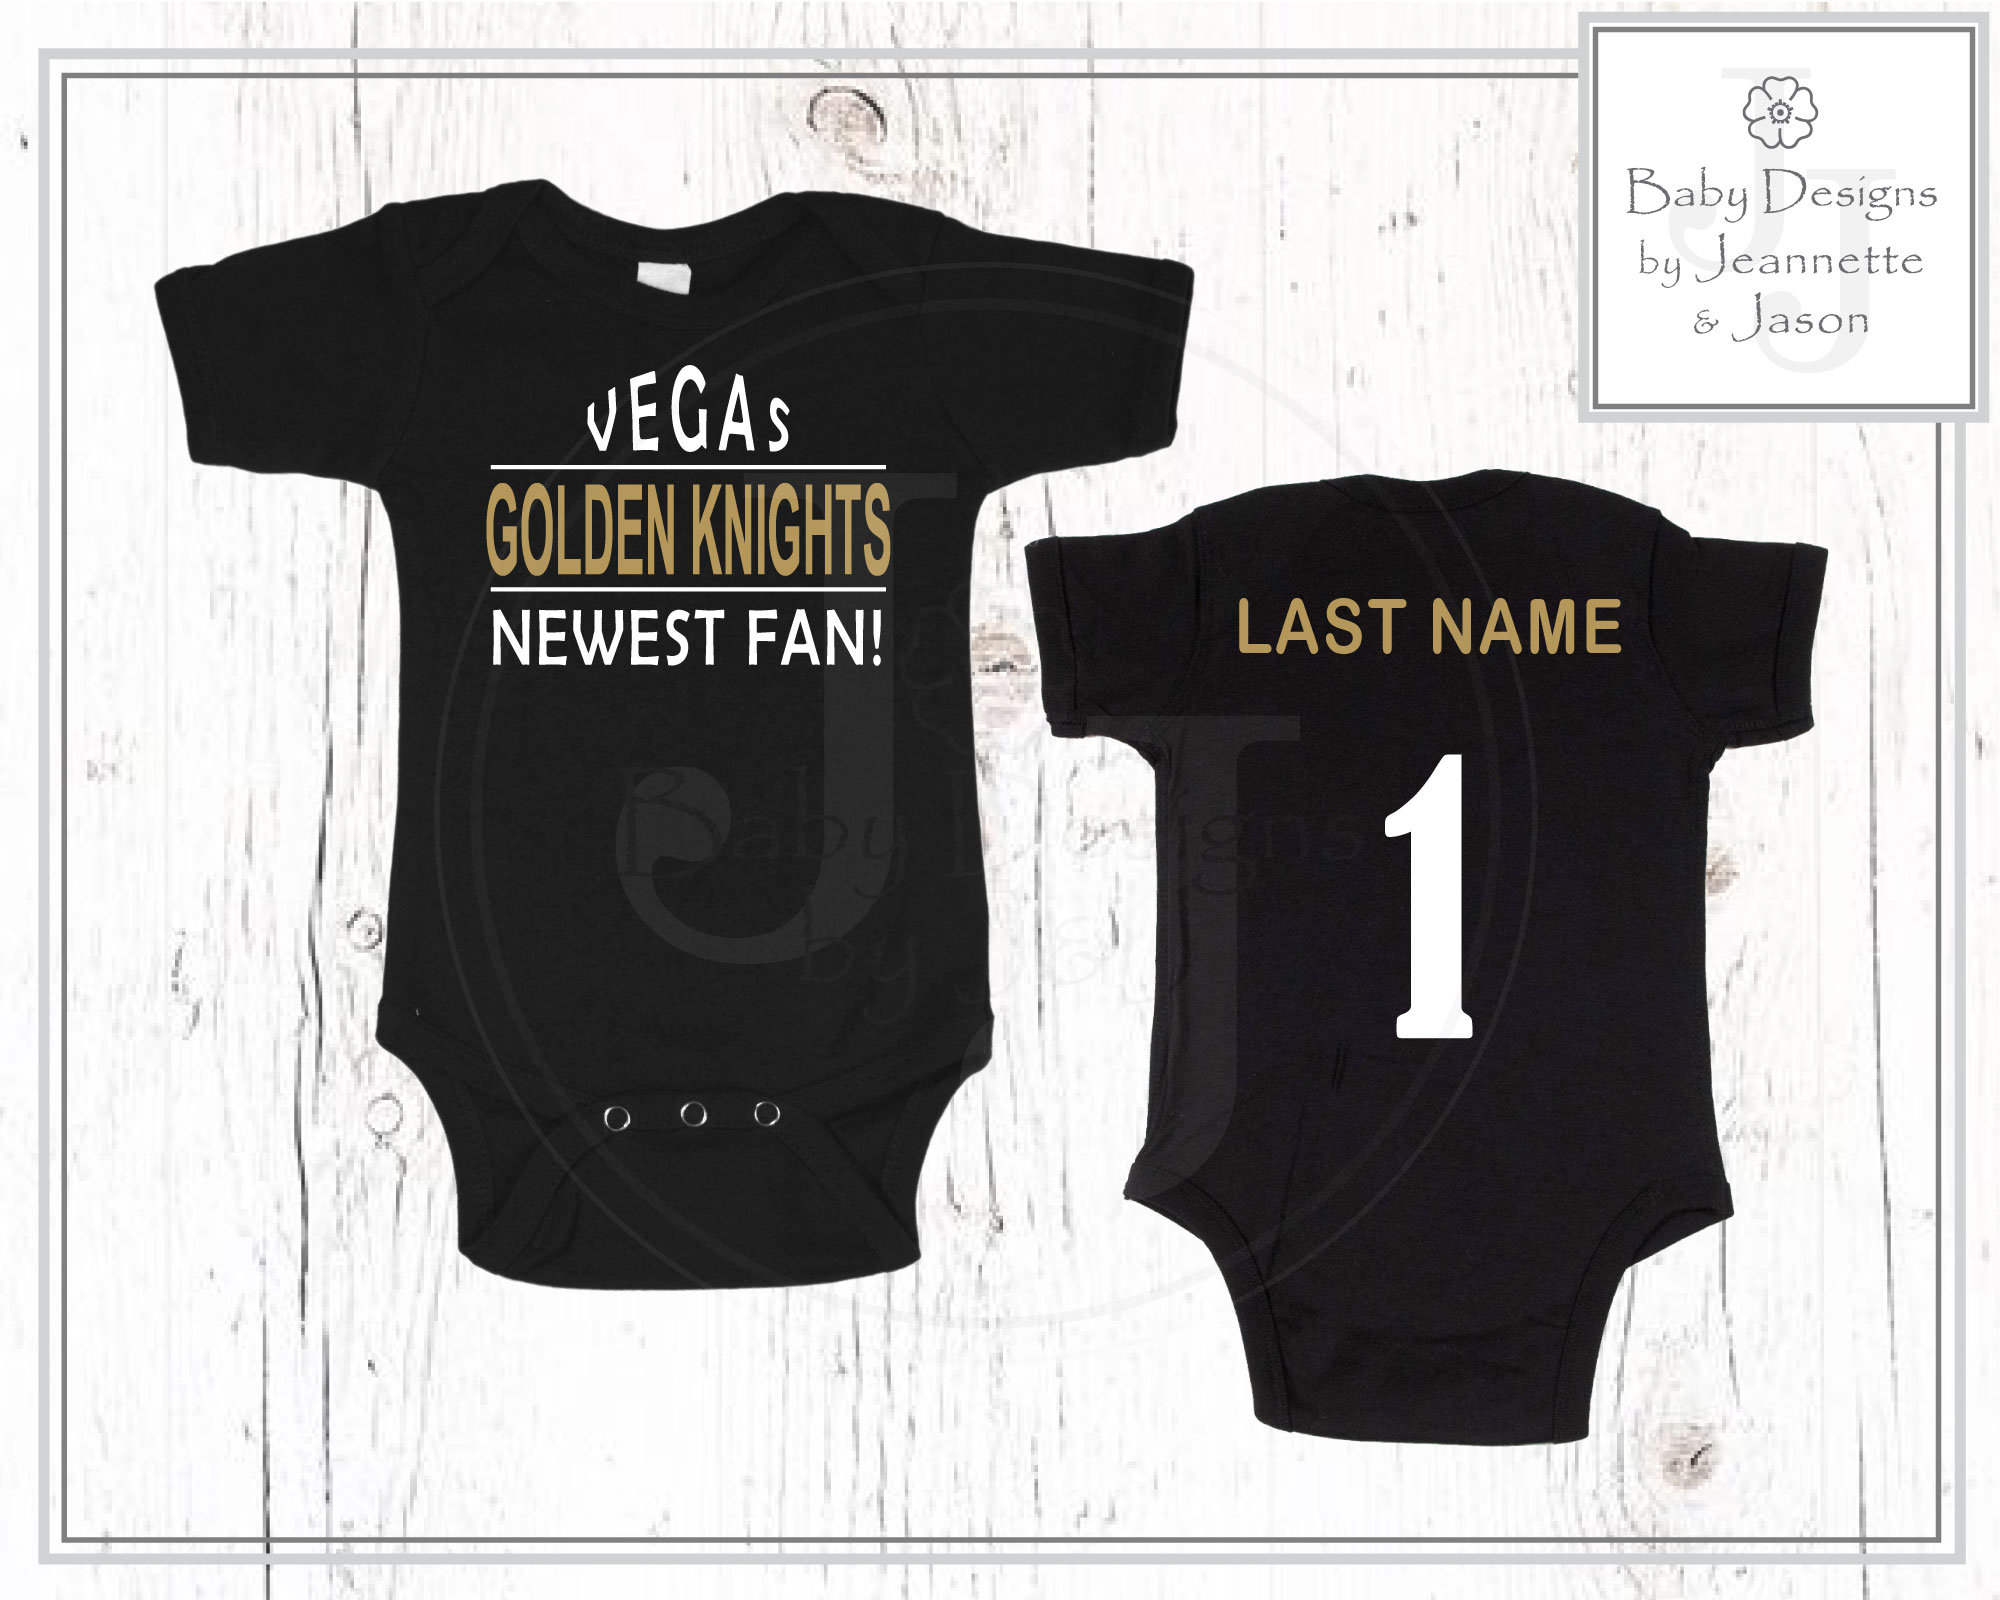 Vegas Golden Knights Starter Cross Check Jersey V-Neck Long Sleeve T-Shirt  - Gold/Black